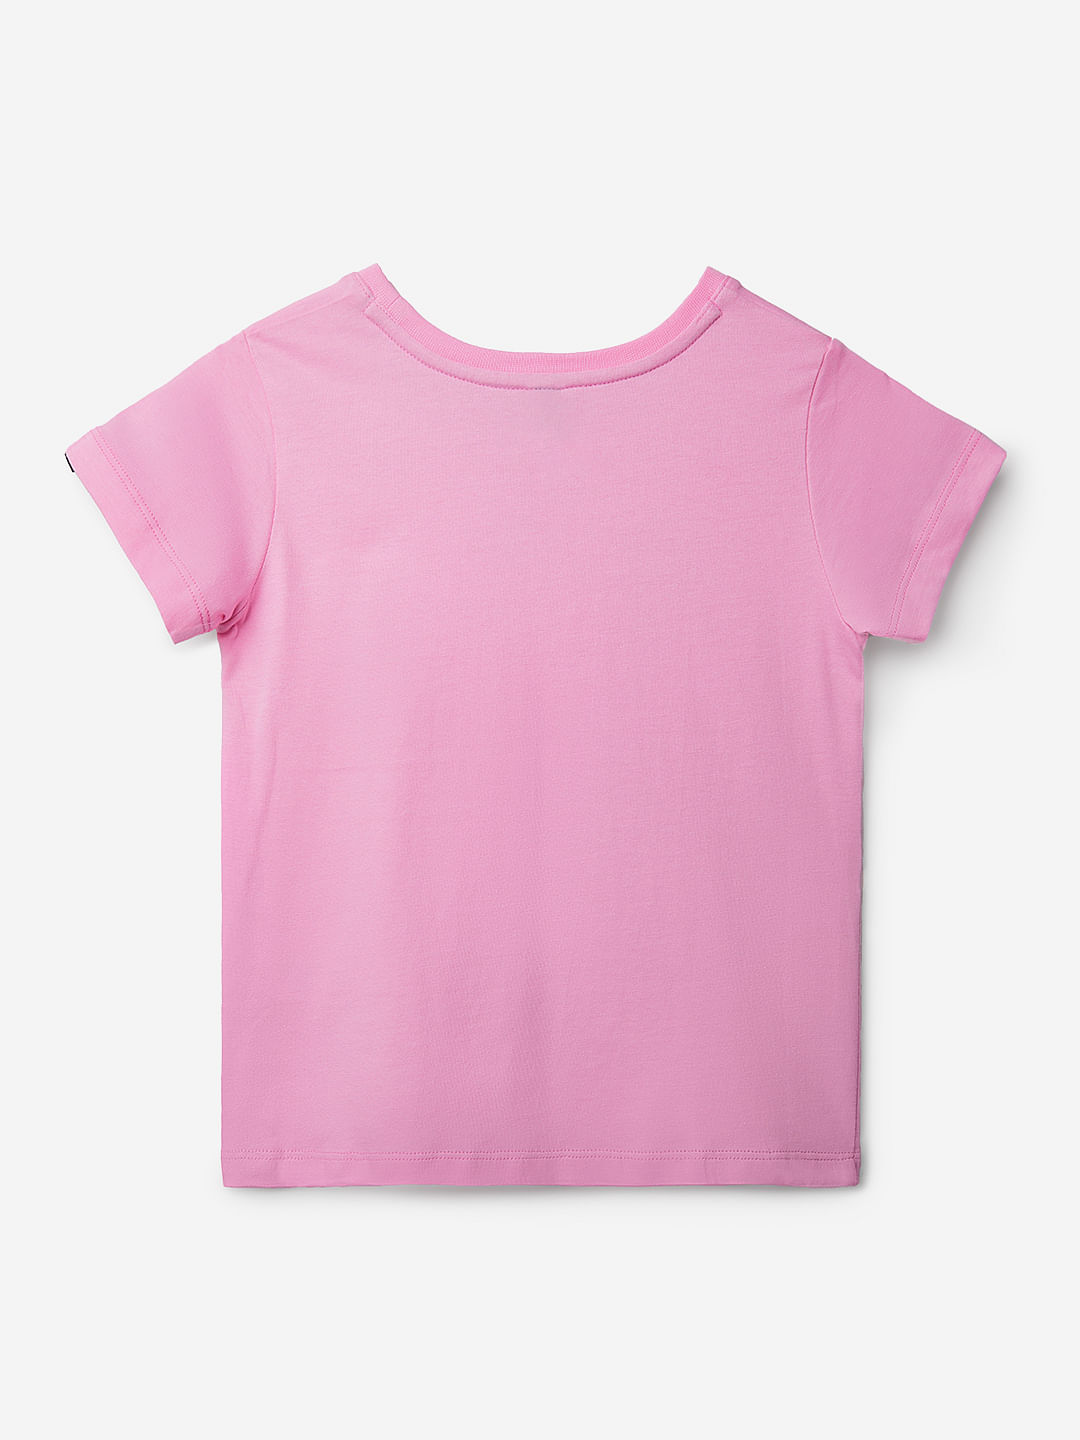 Buy Powerpuff Girls: Blossom Girls T-shirt Online